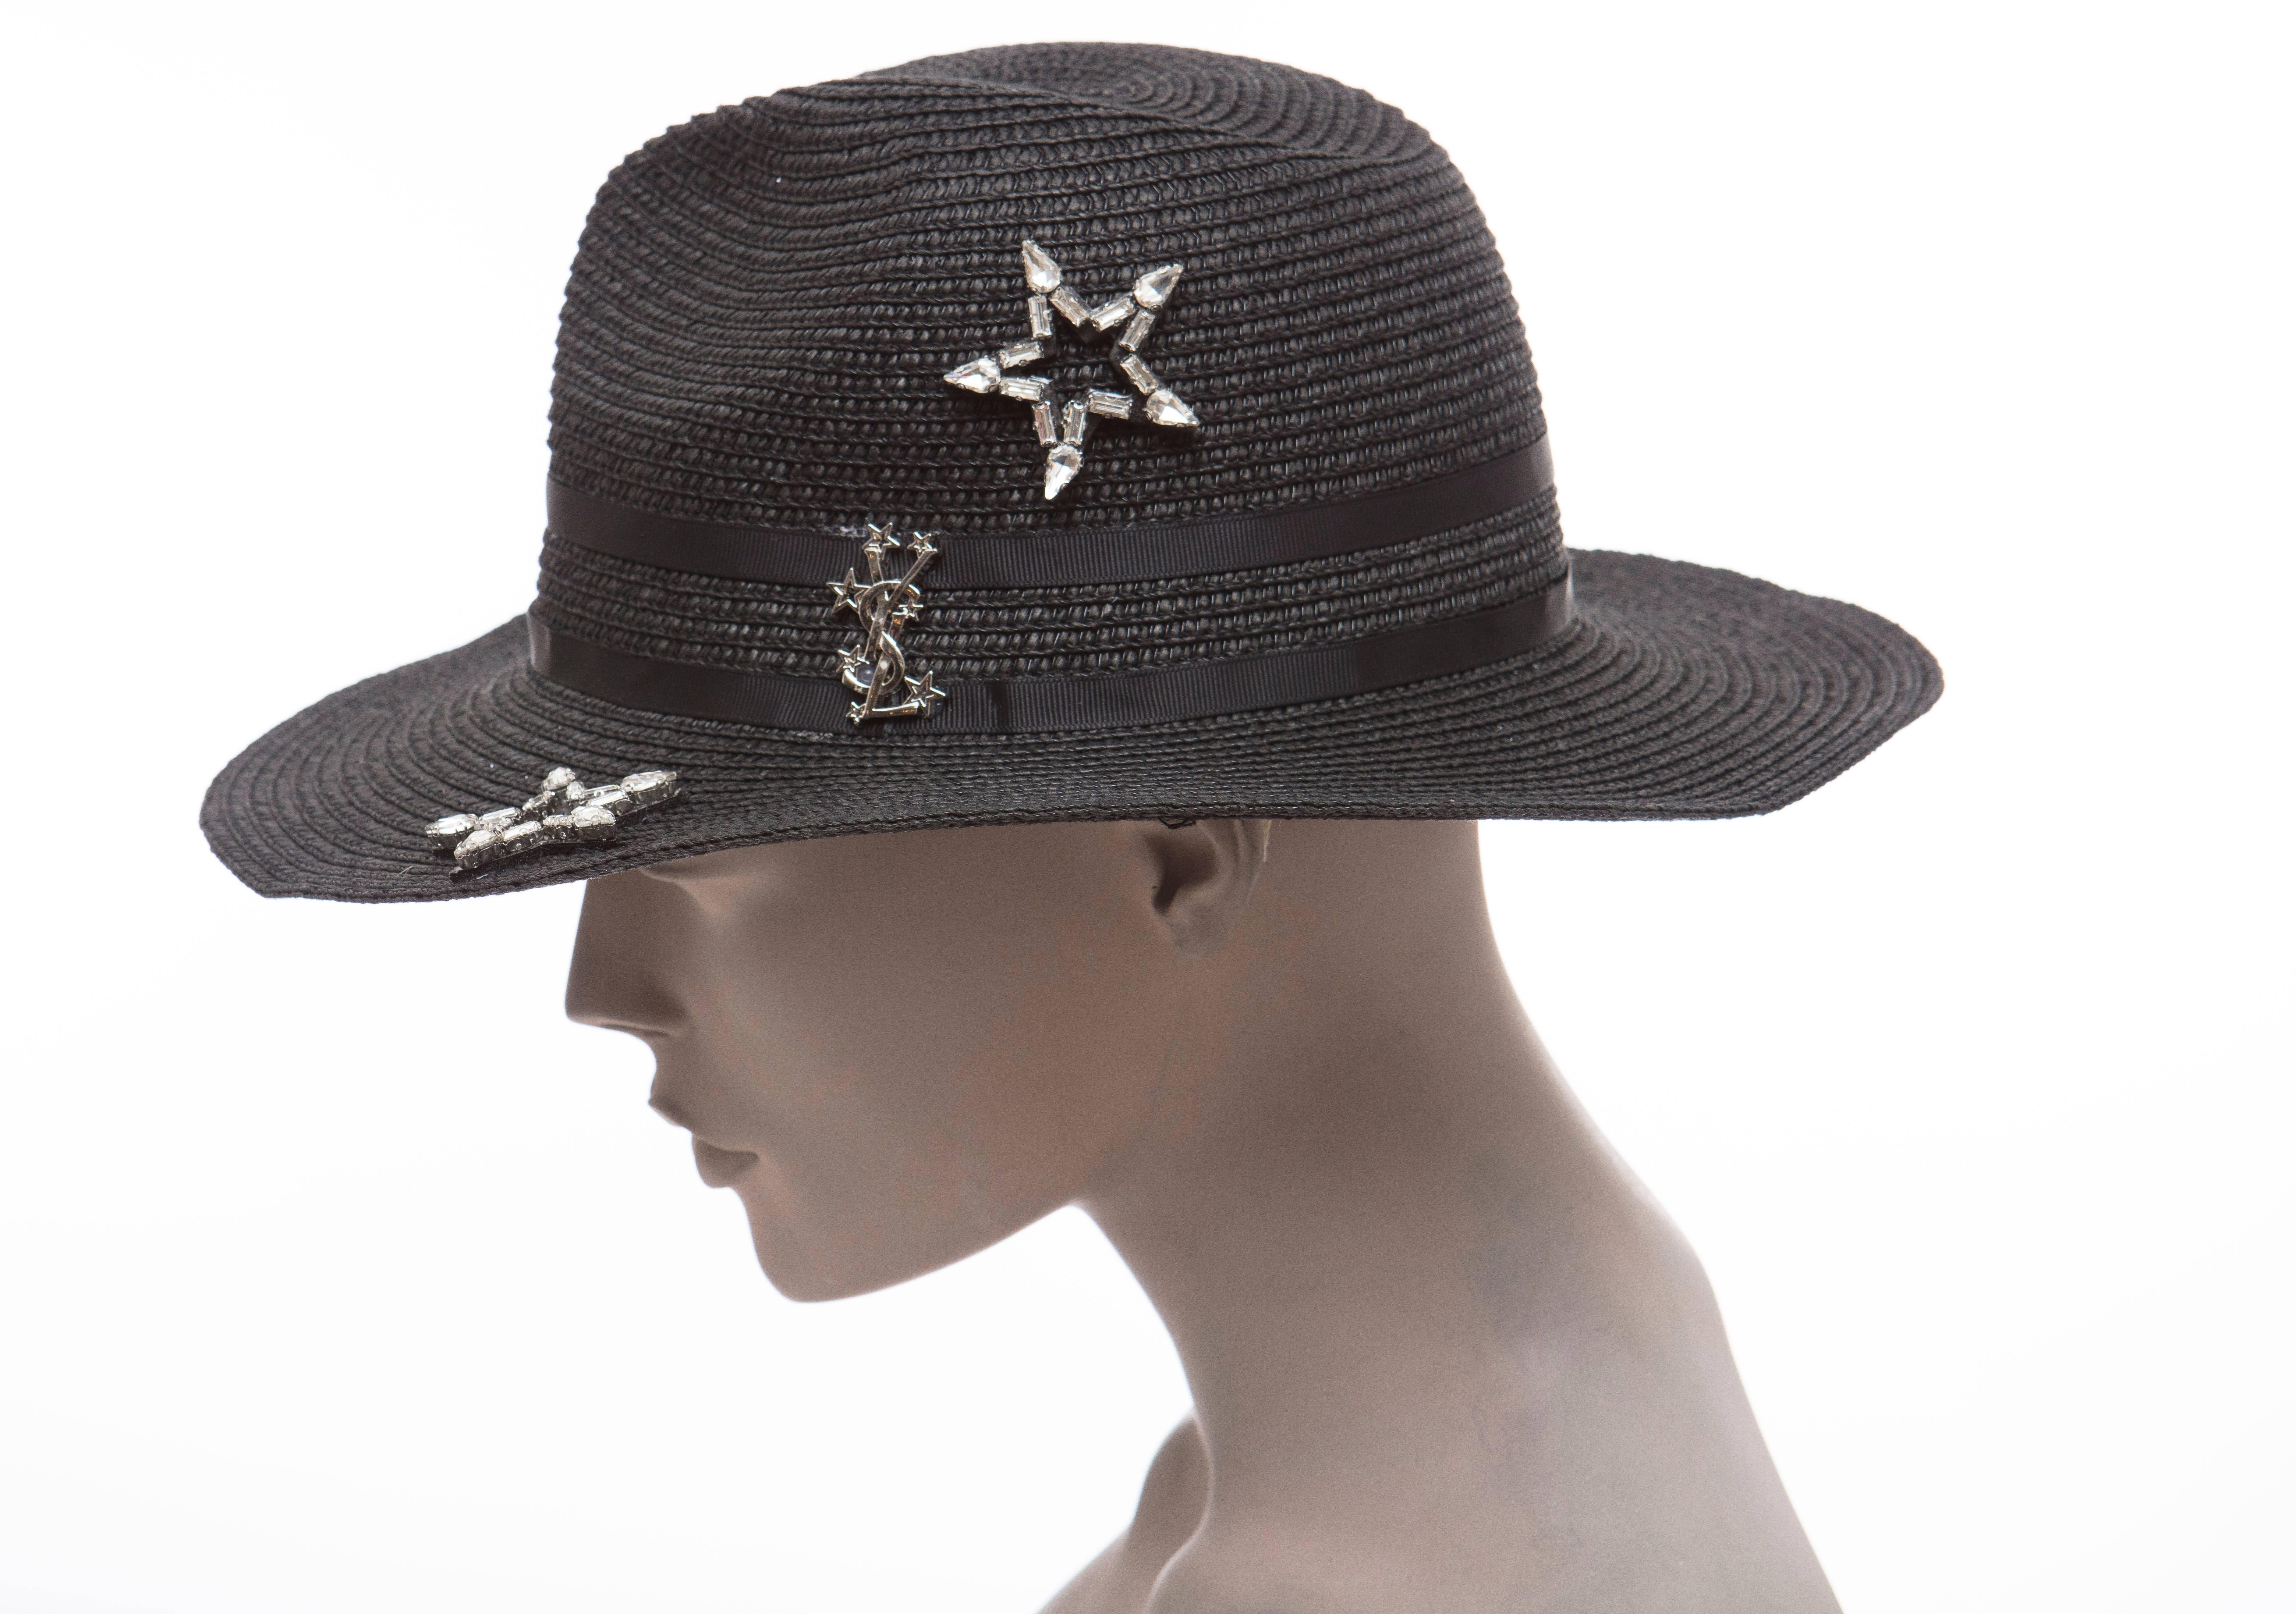 Yves Saint Laurent Black Straw Hat With Crystal Stars And Black Grosgrain Trim 4